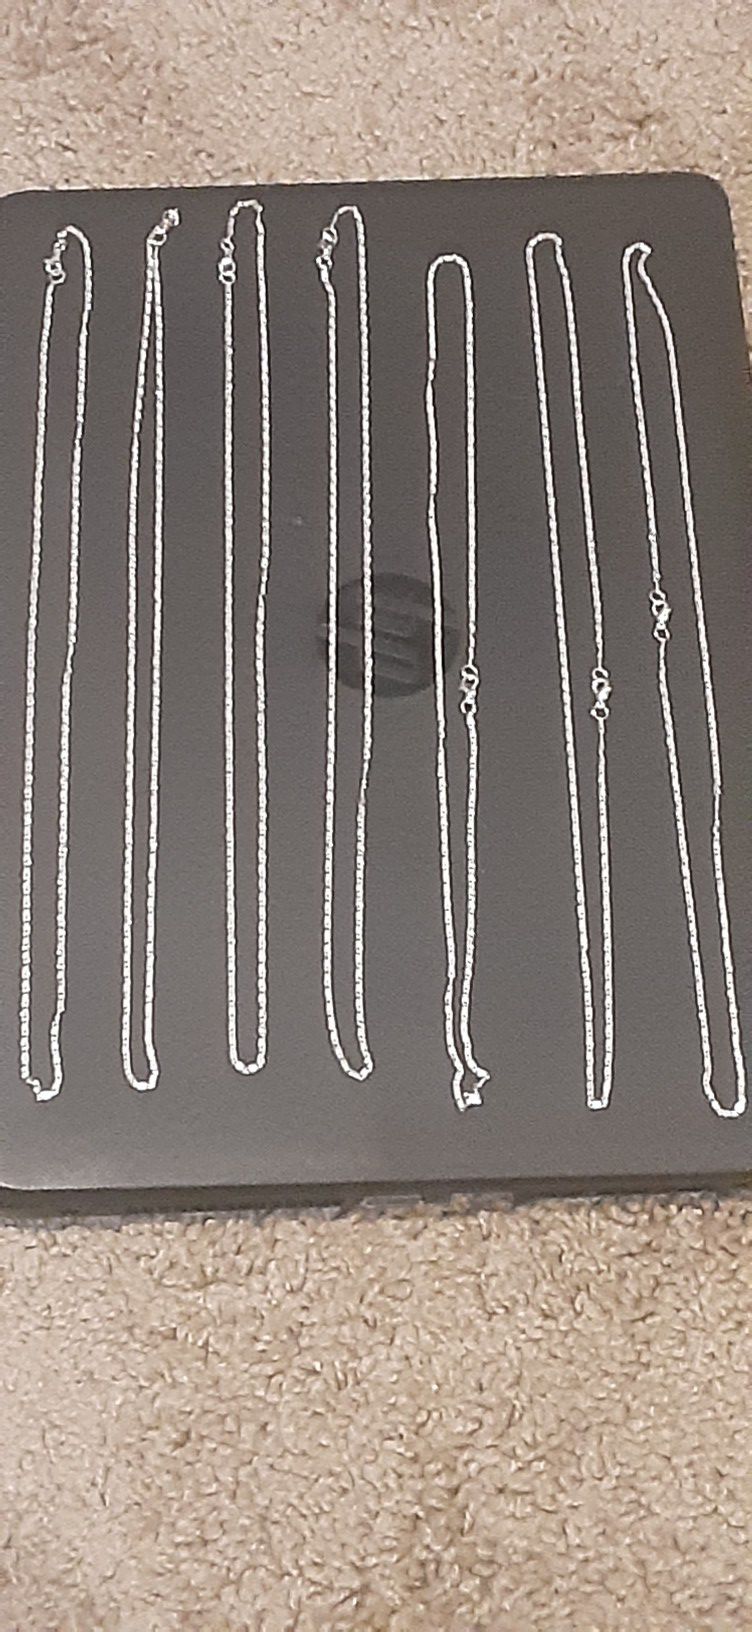 24in silver necklaces